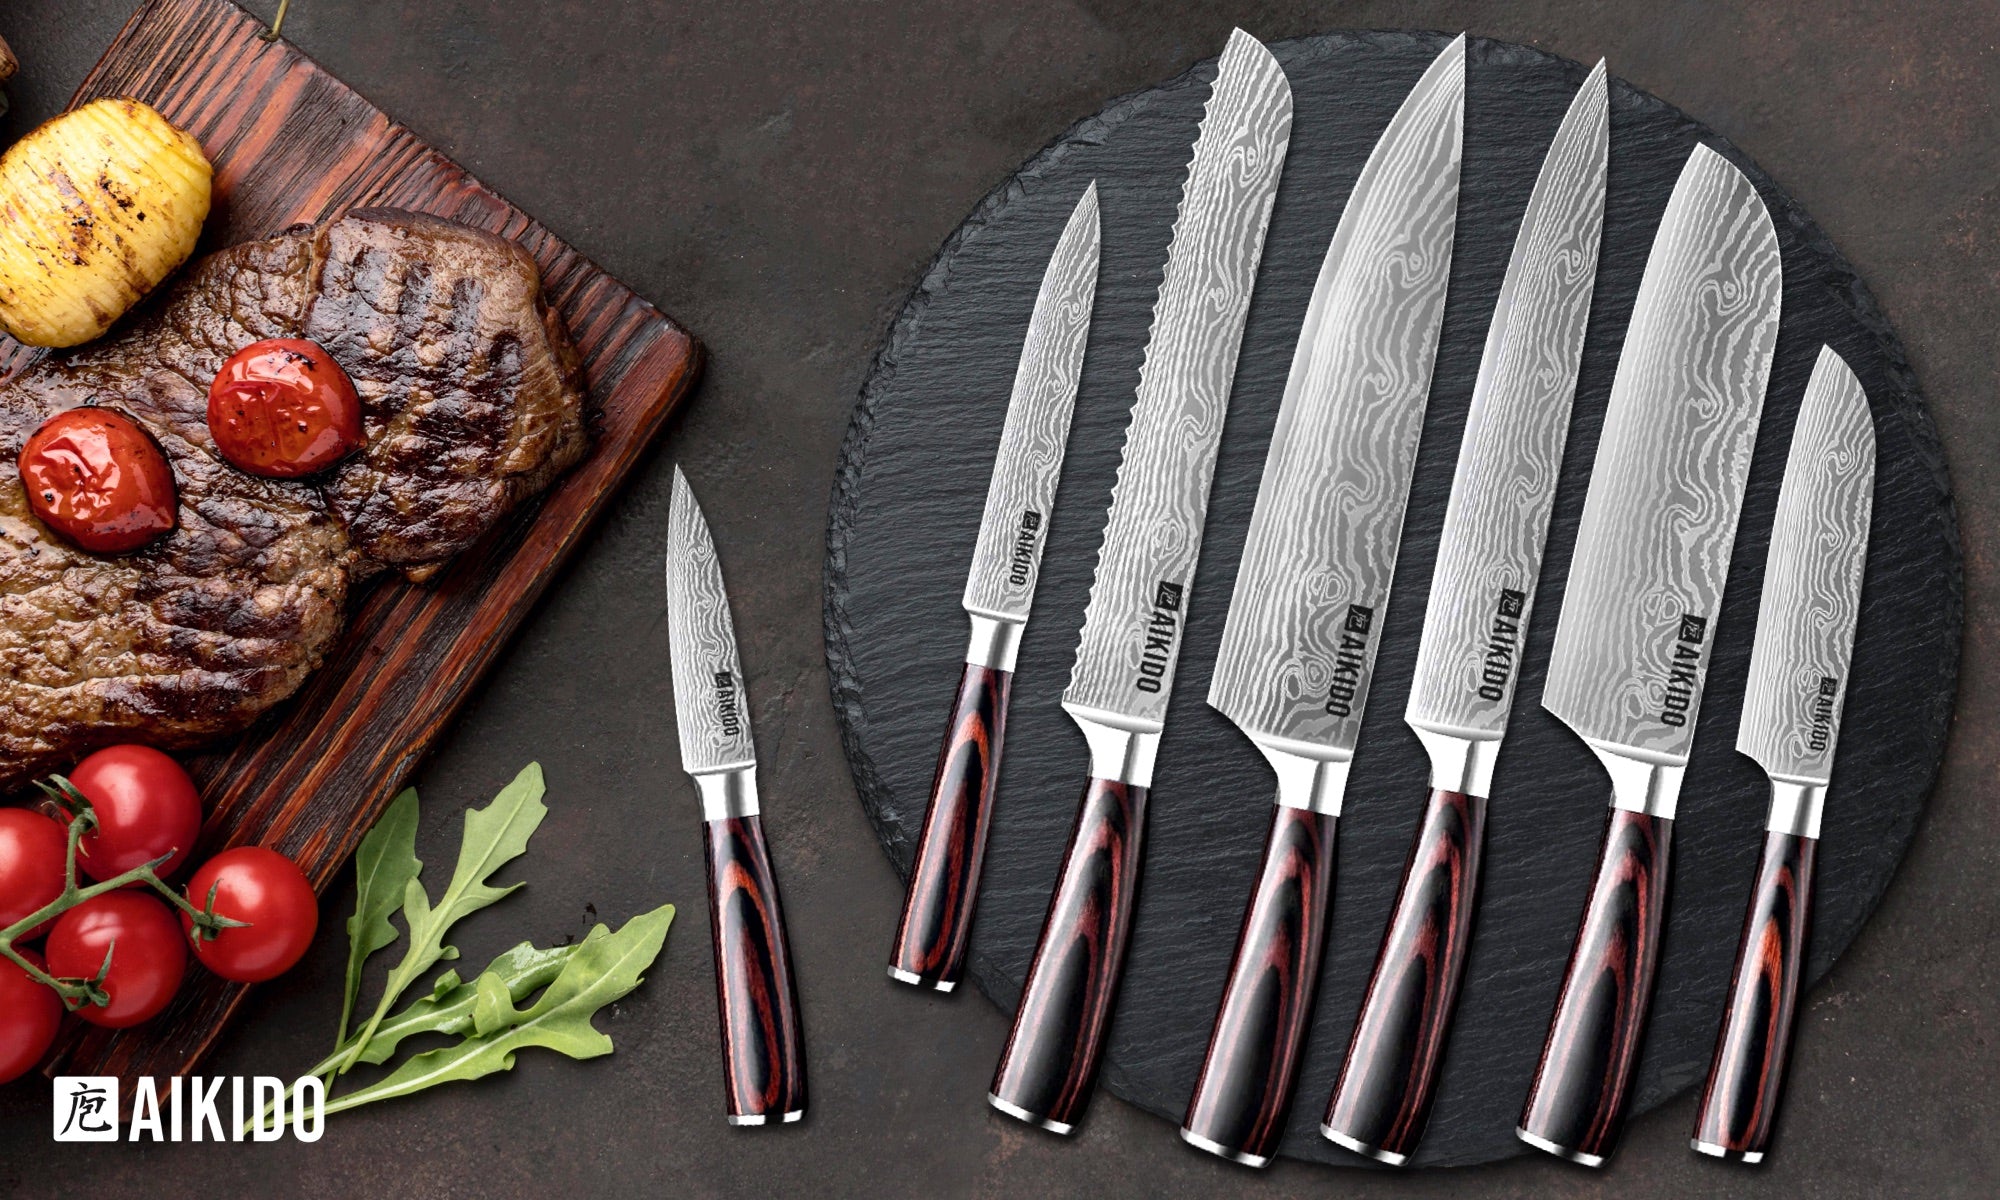 7-piece Knife Set With Oak Block Base, Maple Wood Handles – DEI Equipment